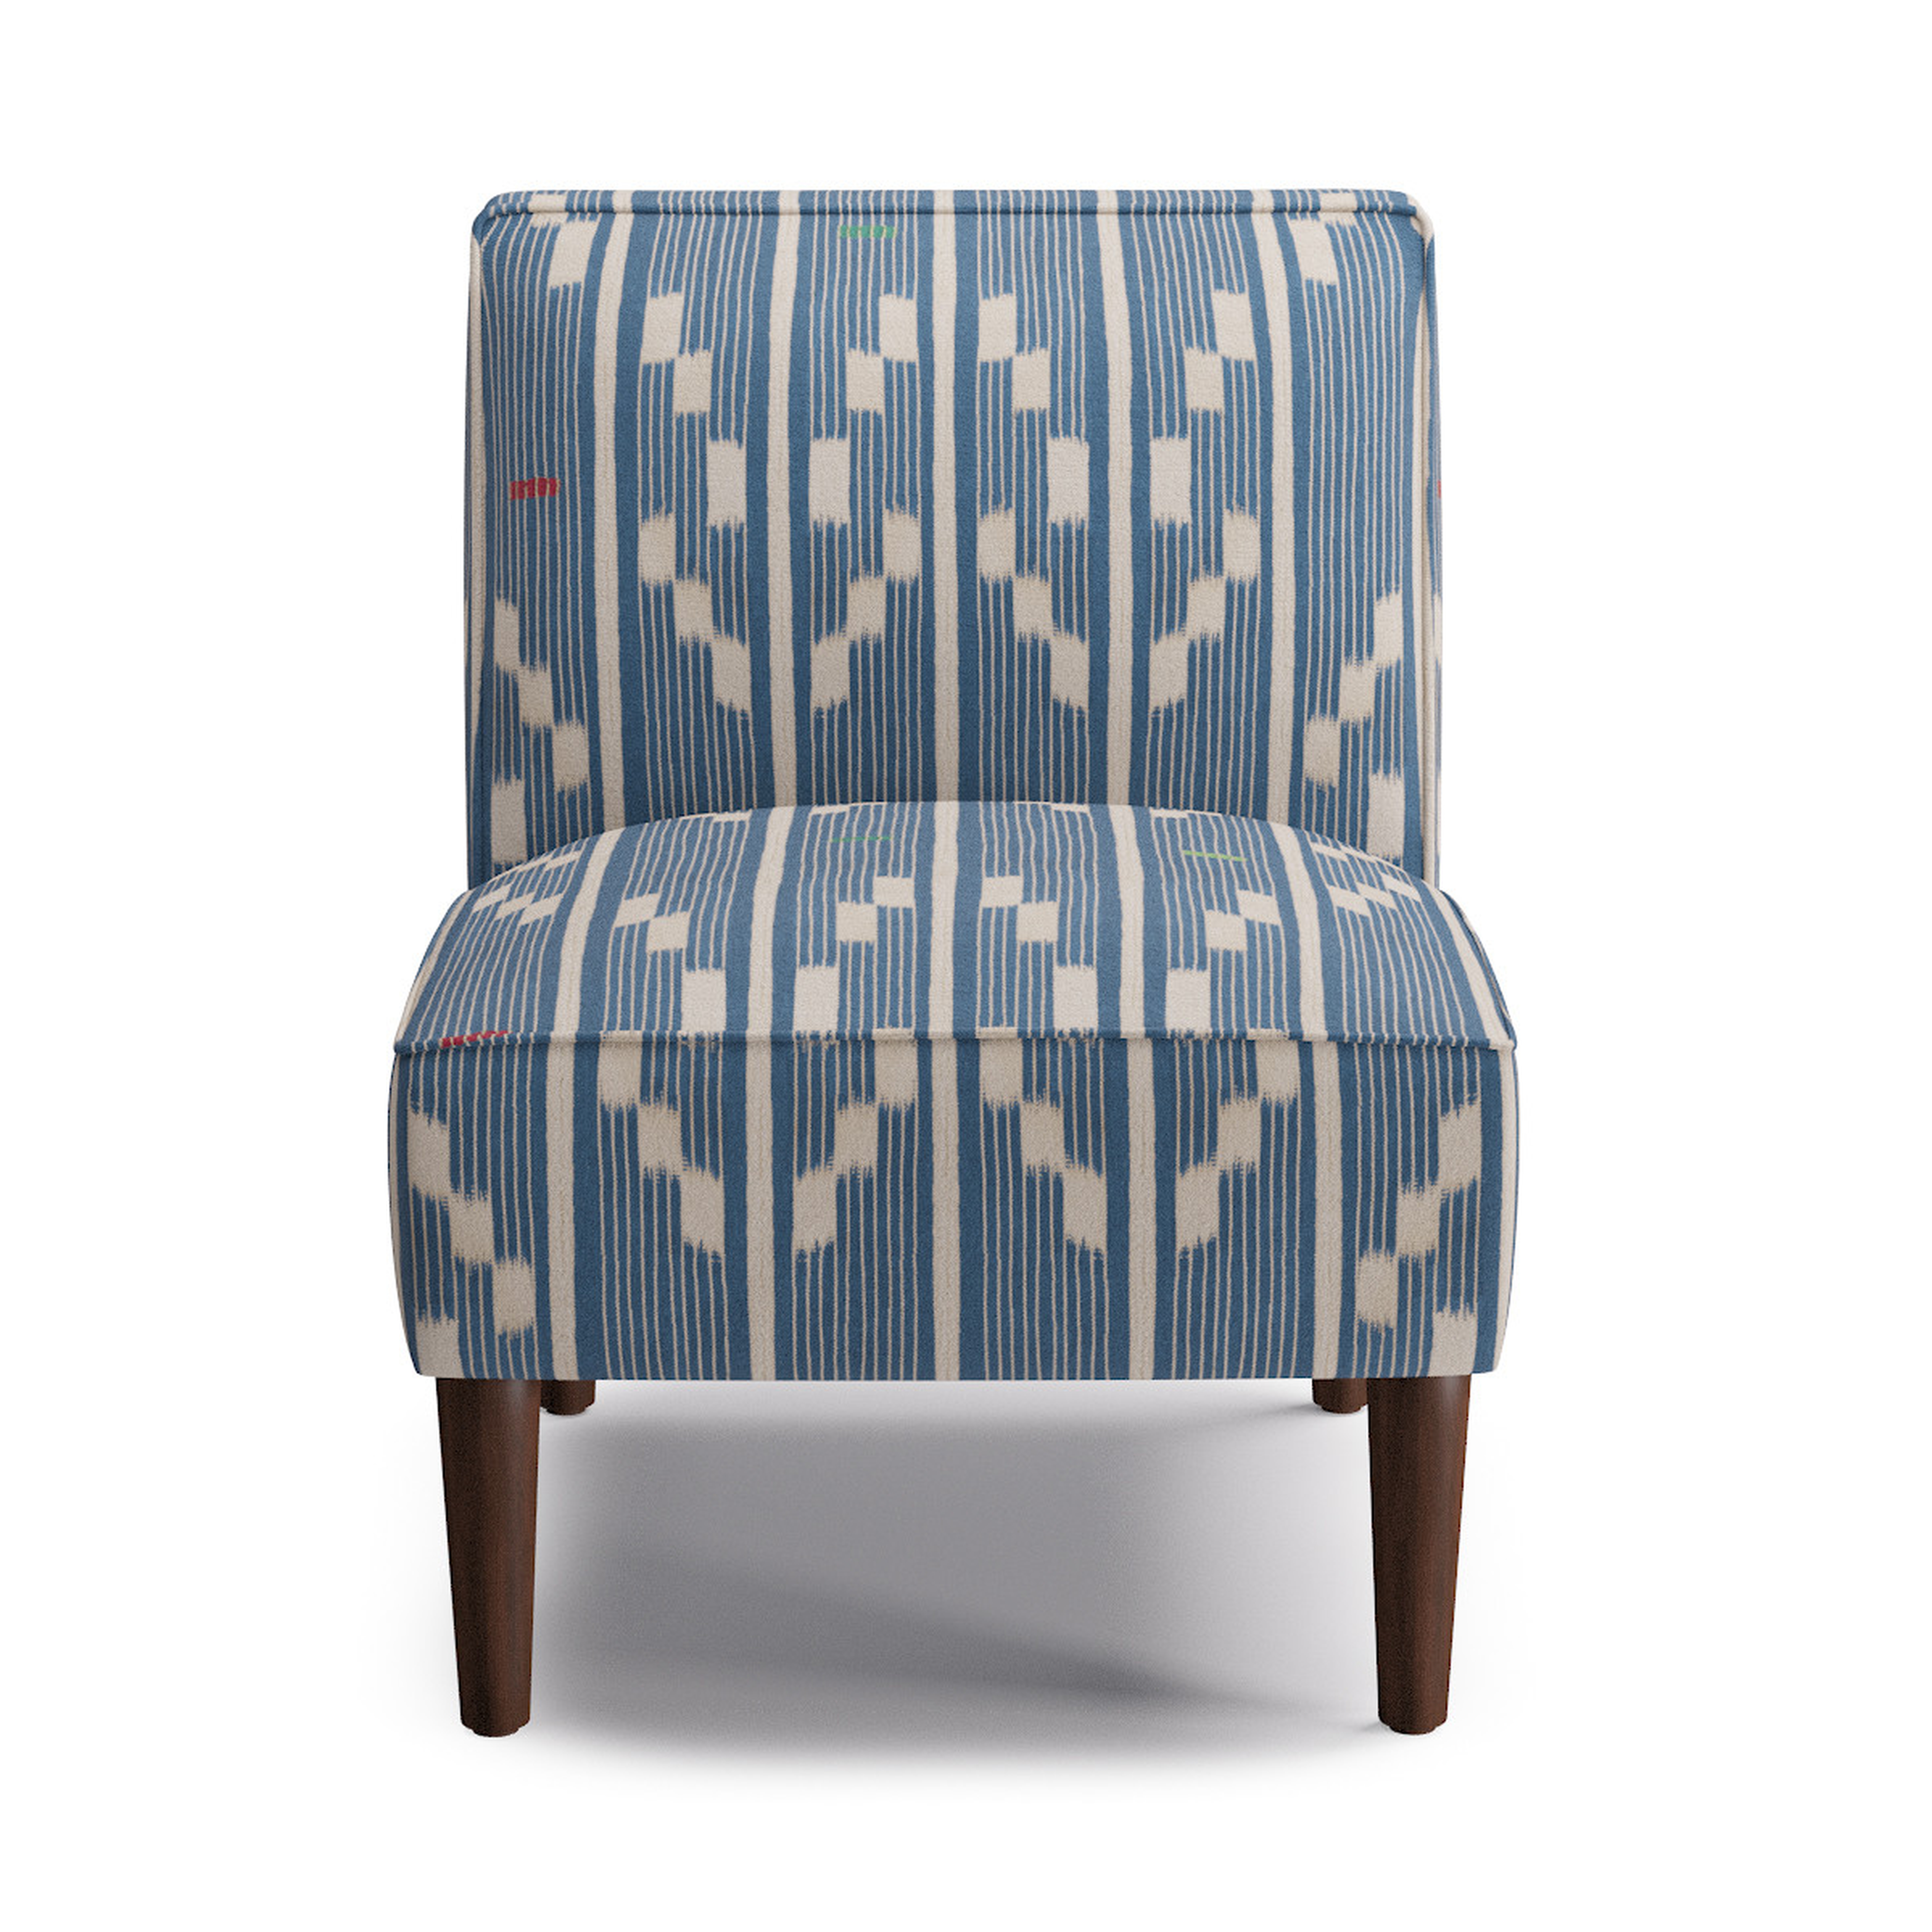 Slipper Chair | Linea Ikat - The Inside